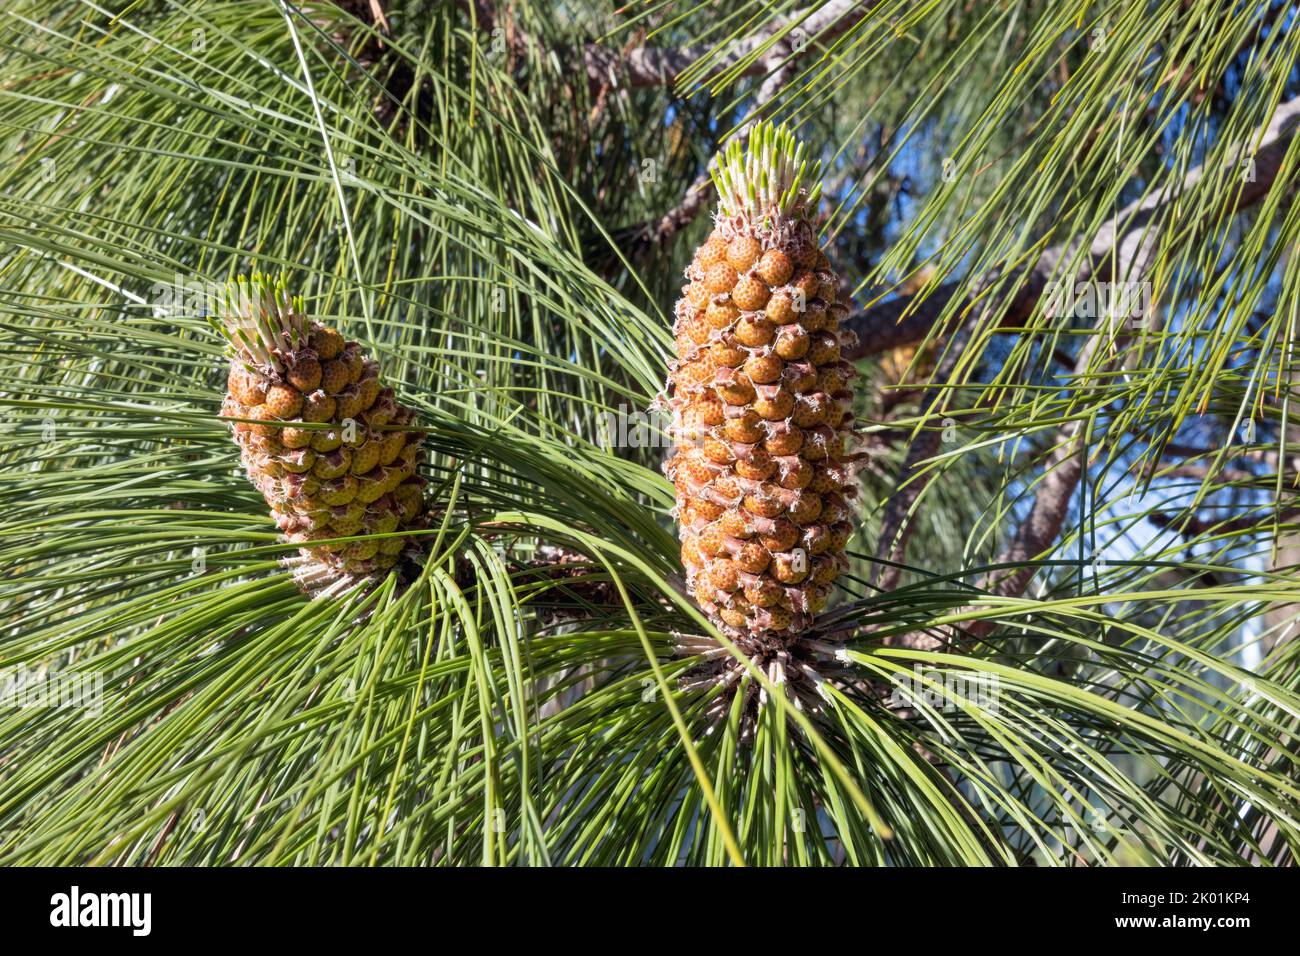 Pine tree with pine cone and needles Stock Photo